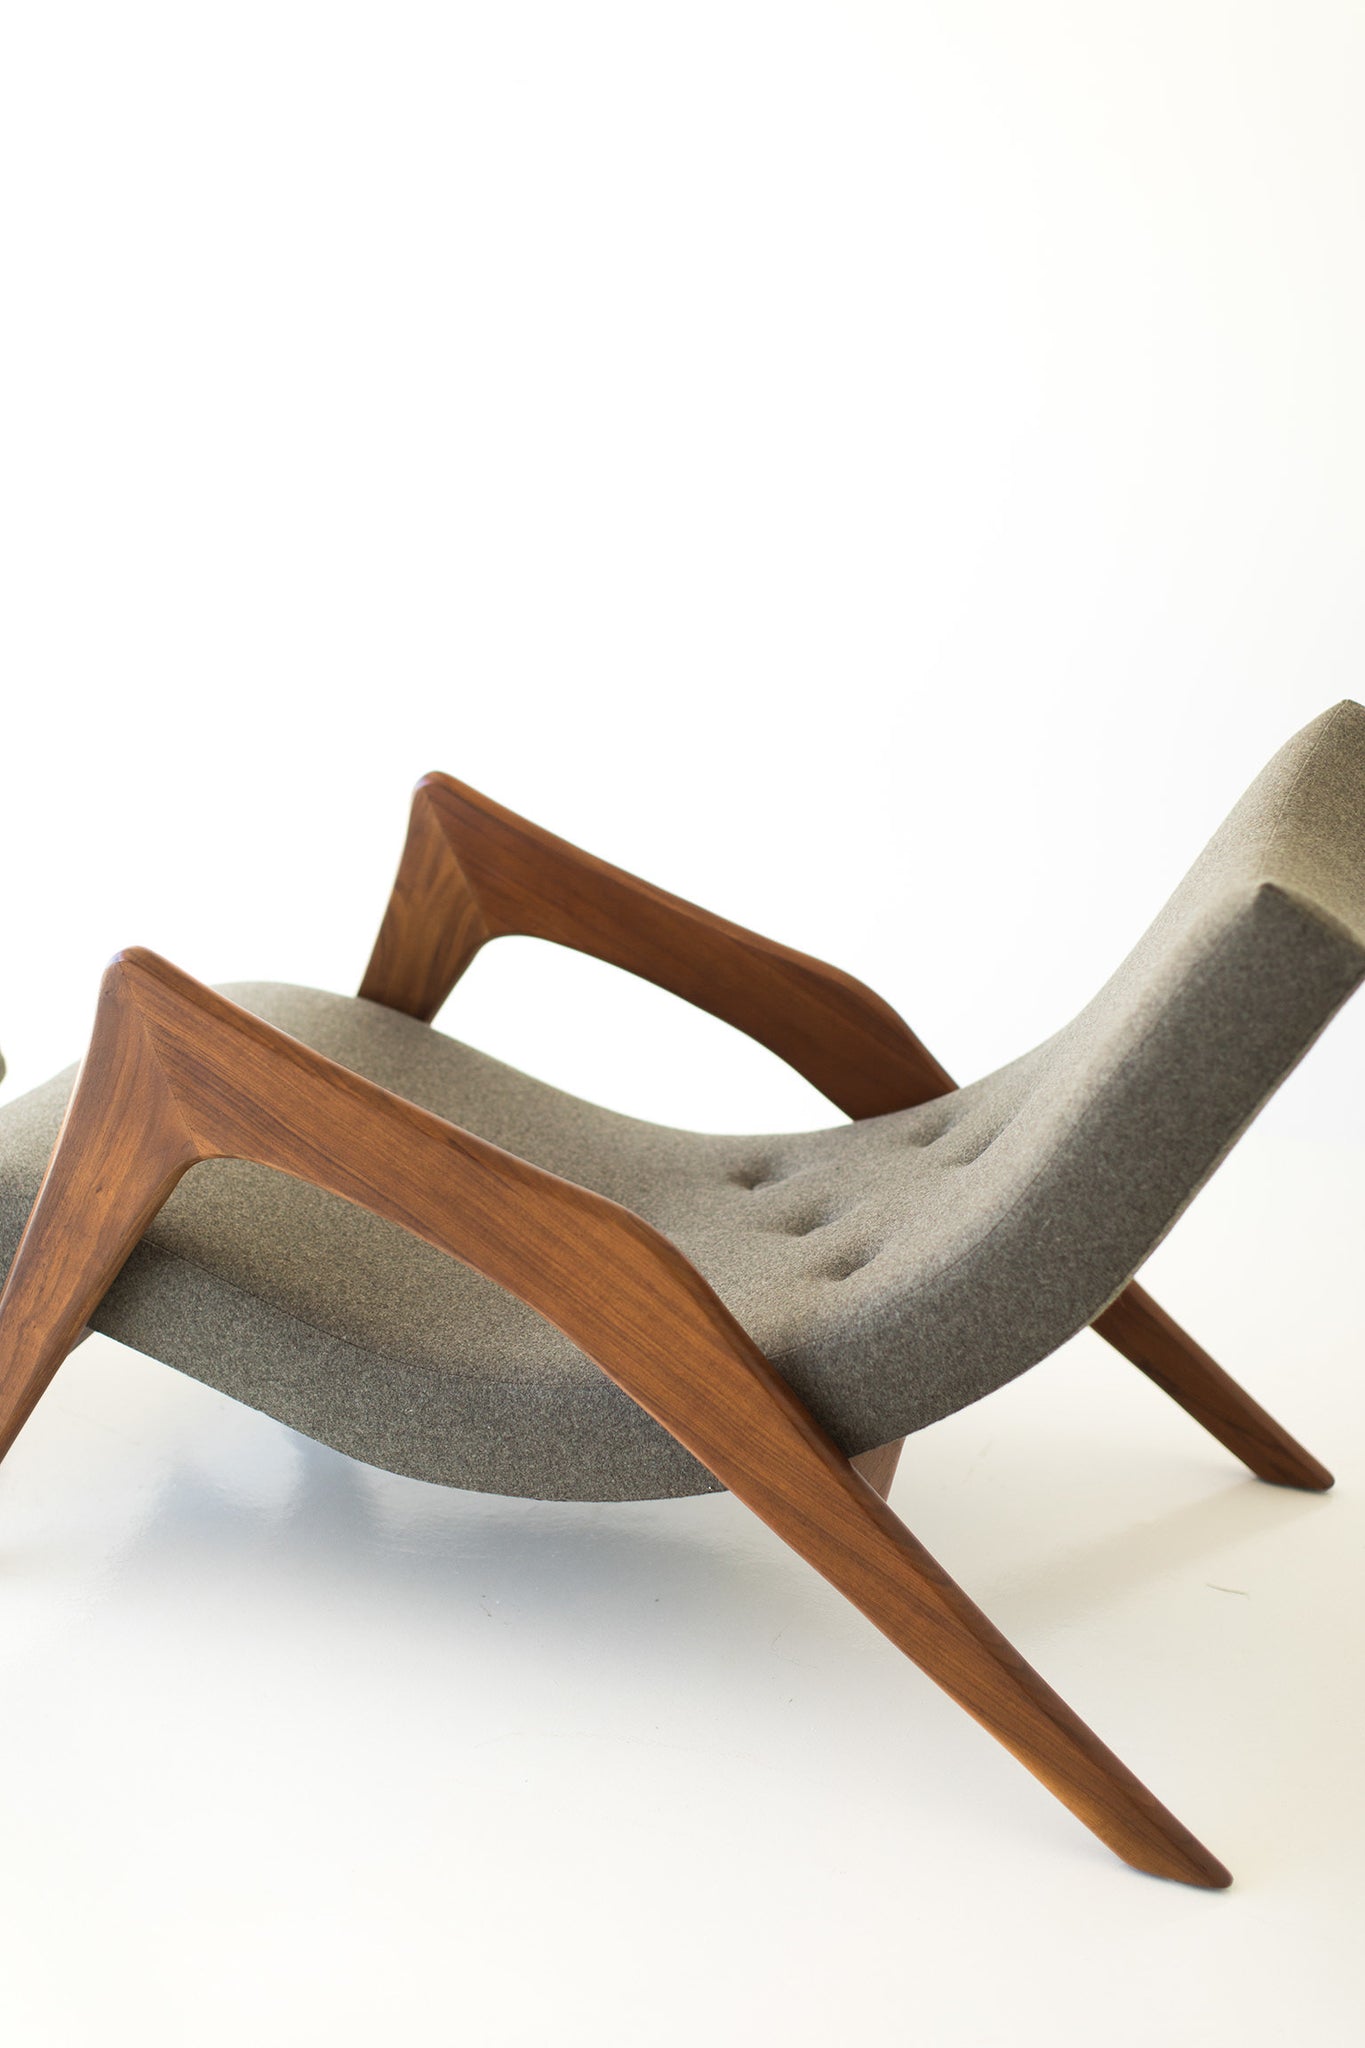 Adrian-Pearsall-Lounge-Chair-Ottoman-Craft-Associates-Inc-003